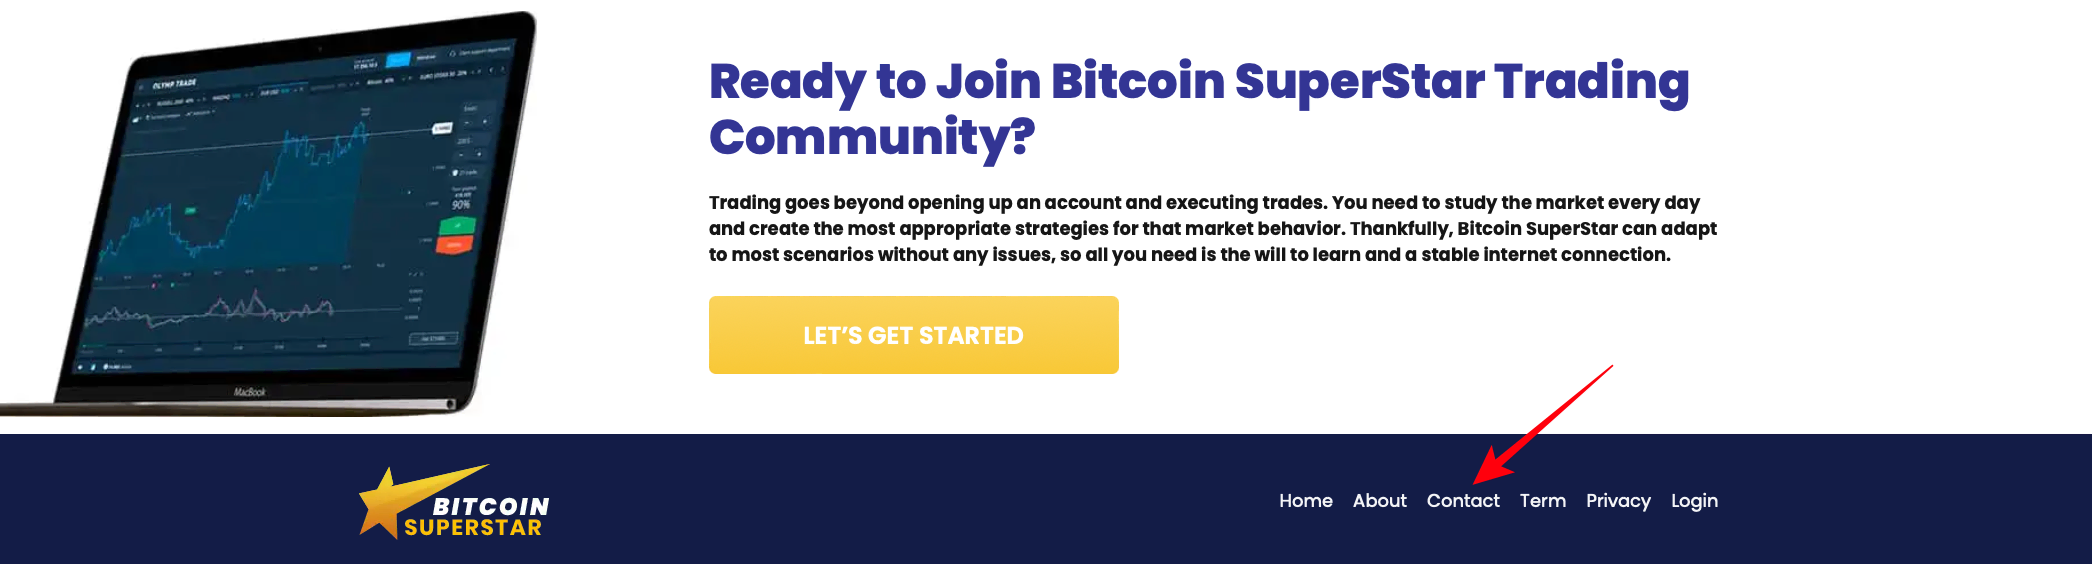 Cara menghubungi dukungan pelanggan superstar Bitcoin